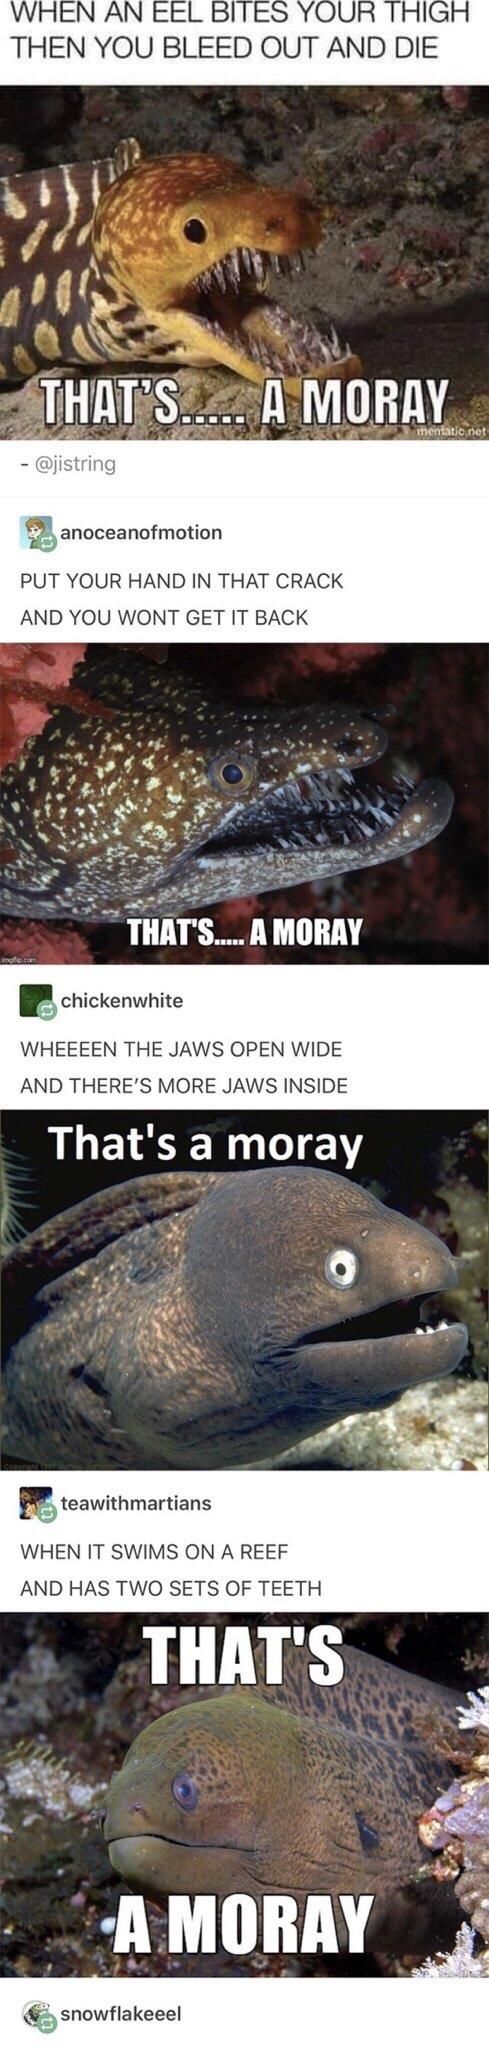 That’s a Moray